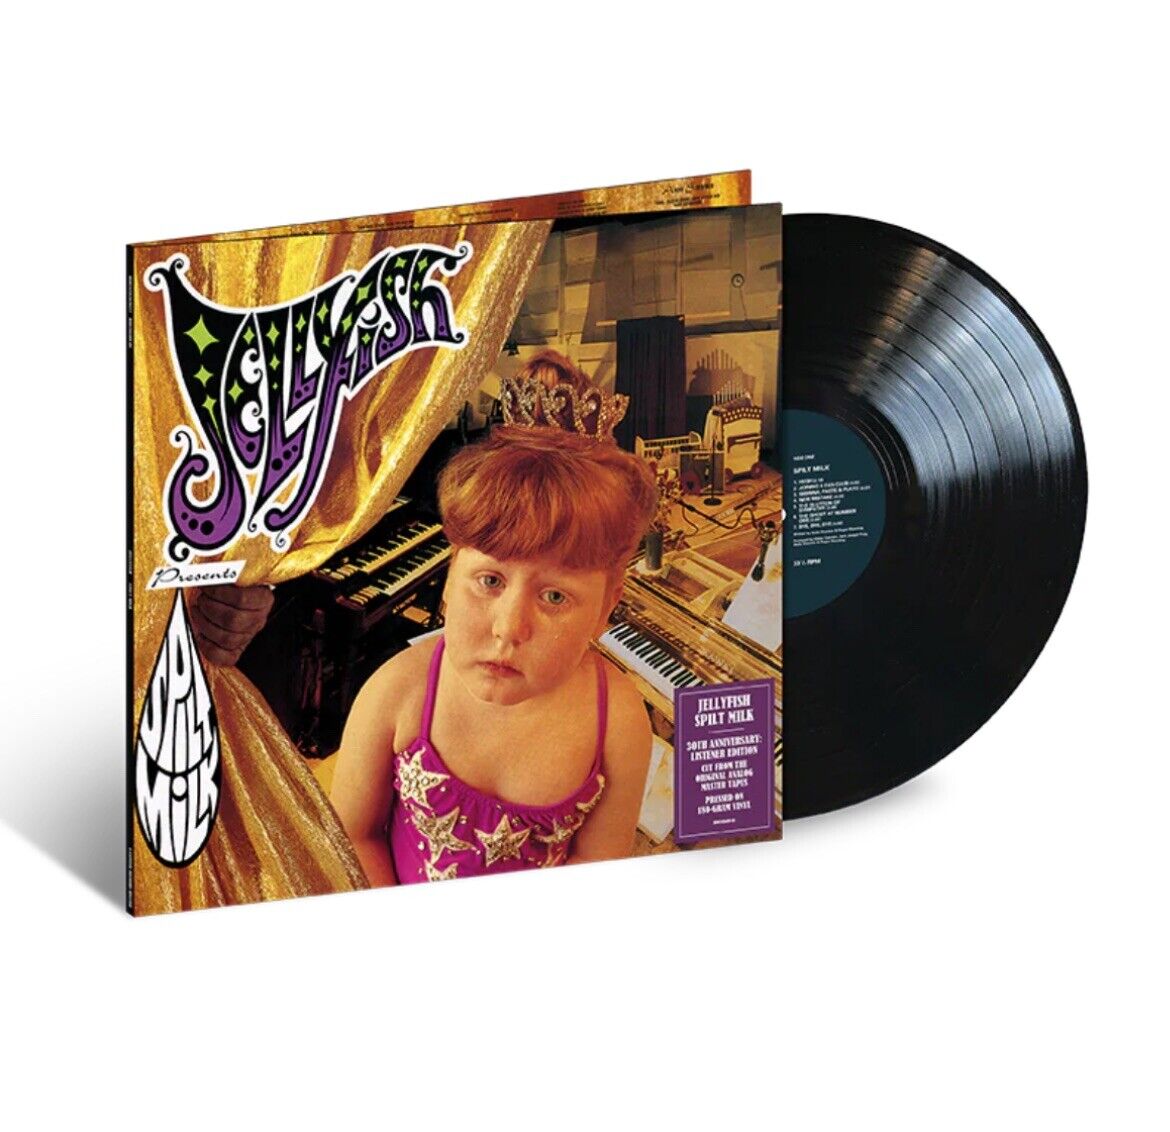 *BRAND NEW* Jellyfish - Spilt Milk Limited Listener Edition Vinyl LP